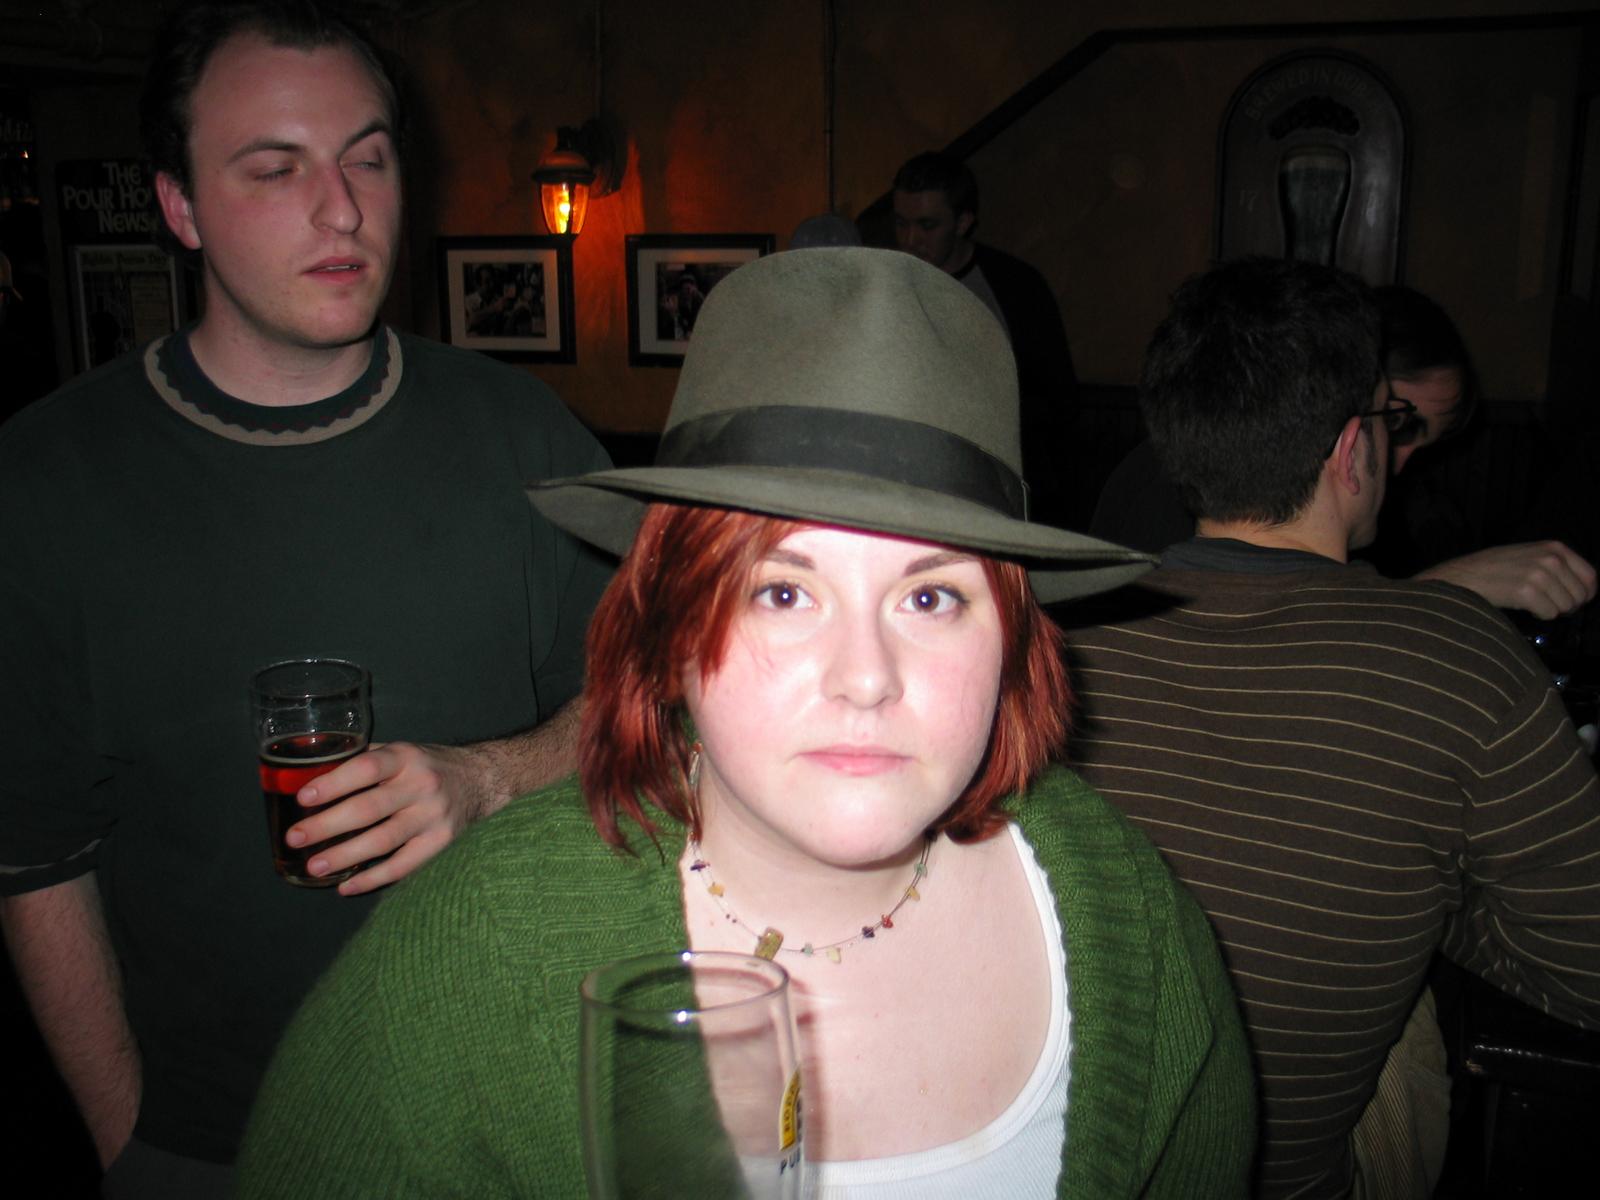 Lara wearing her friend's hat